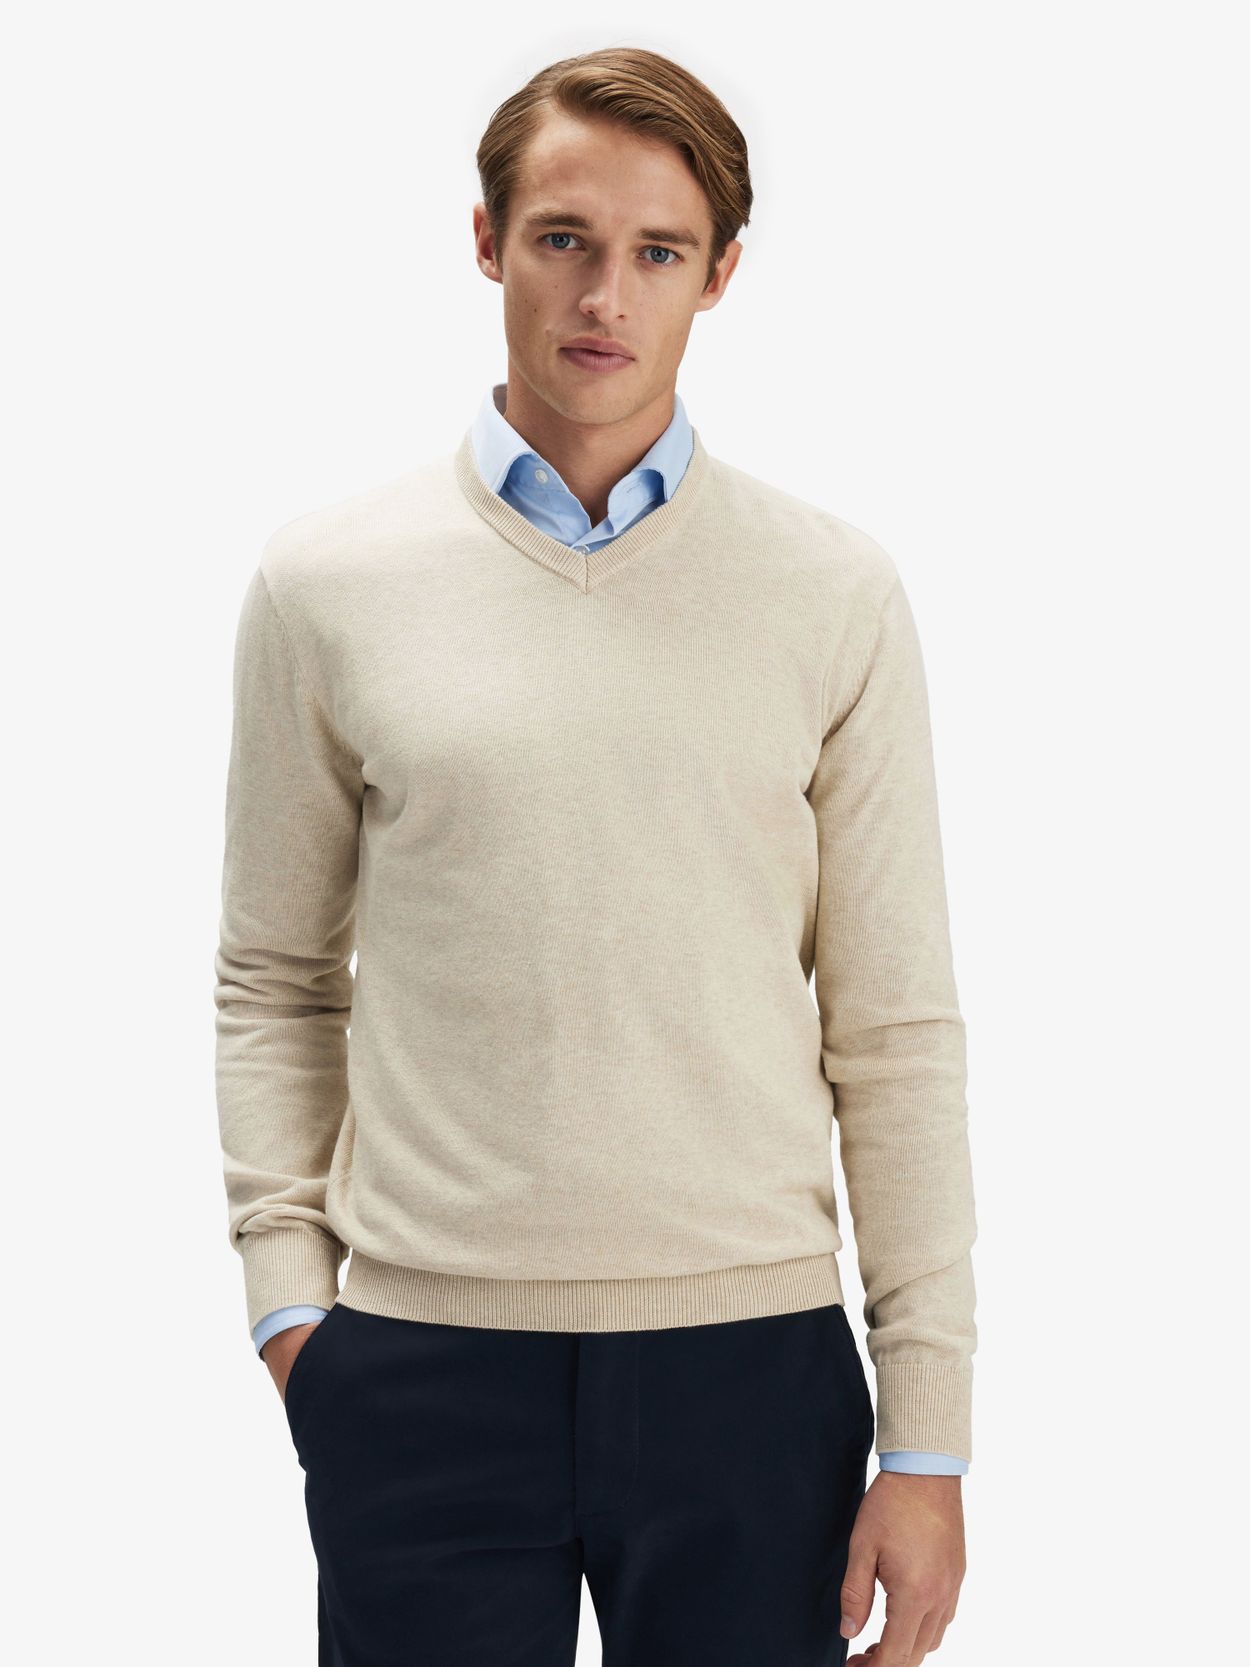 Light Beige Sweater Cotton